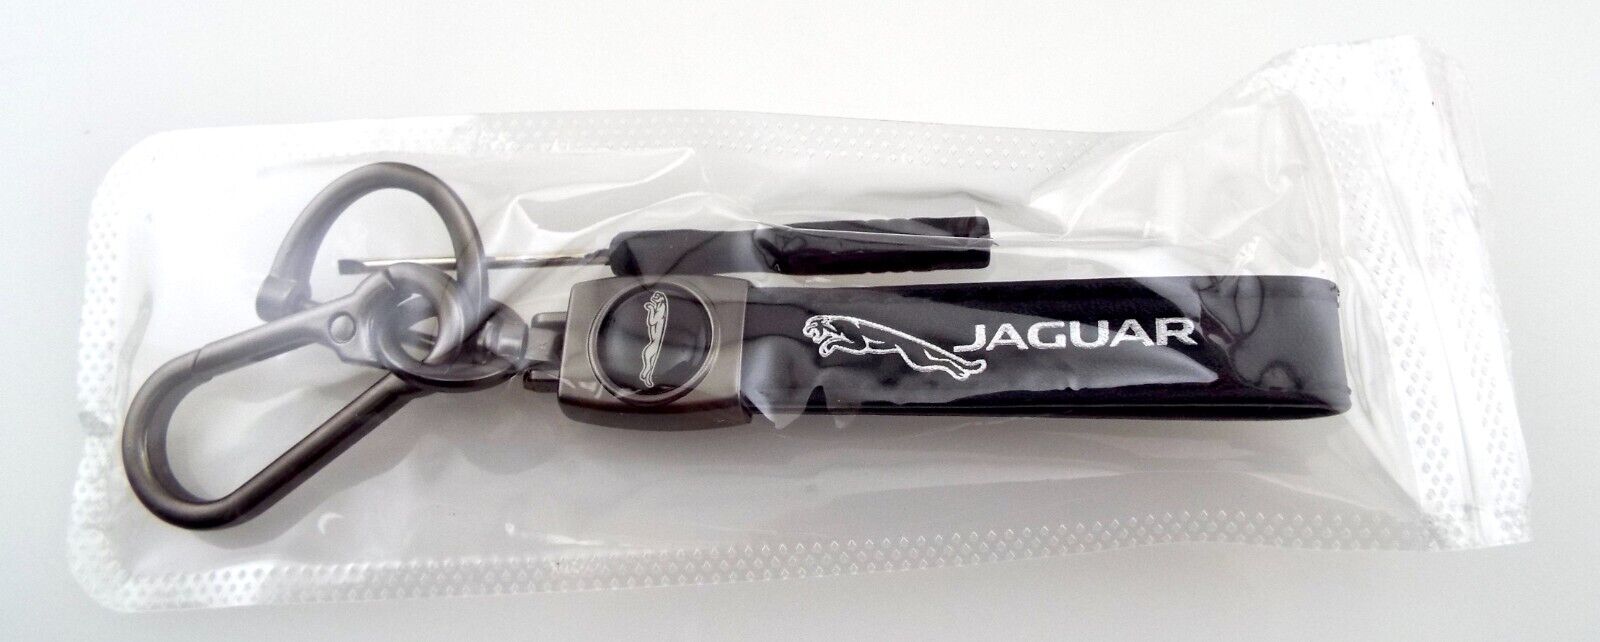 Jaguar - Genuine Leather Keychain Car Key Chain Ring - NEW